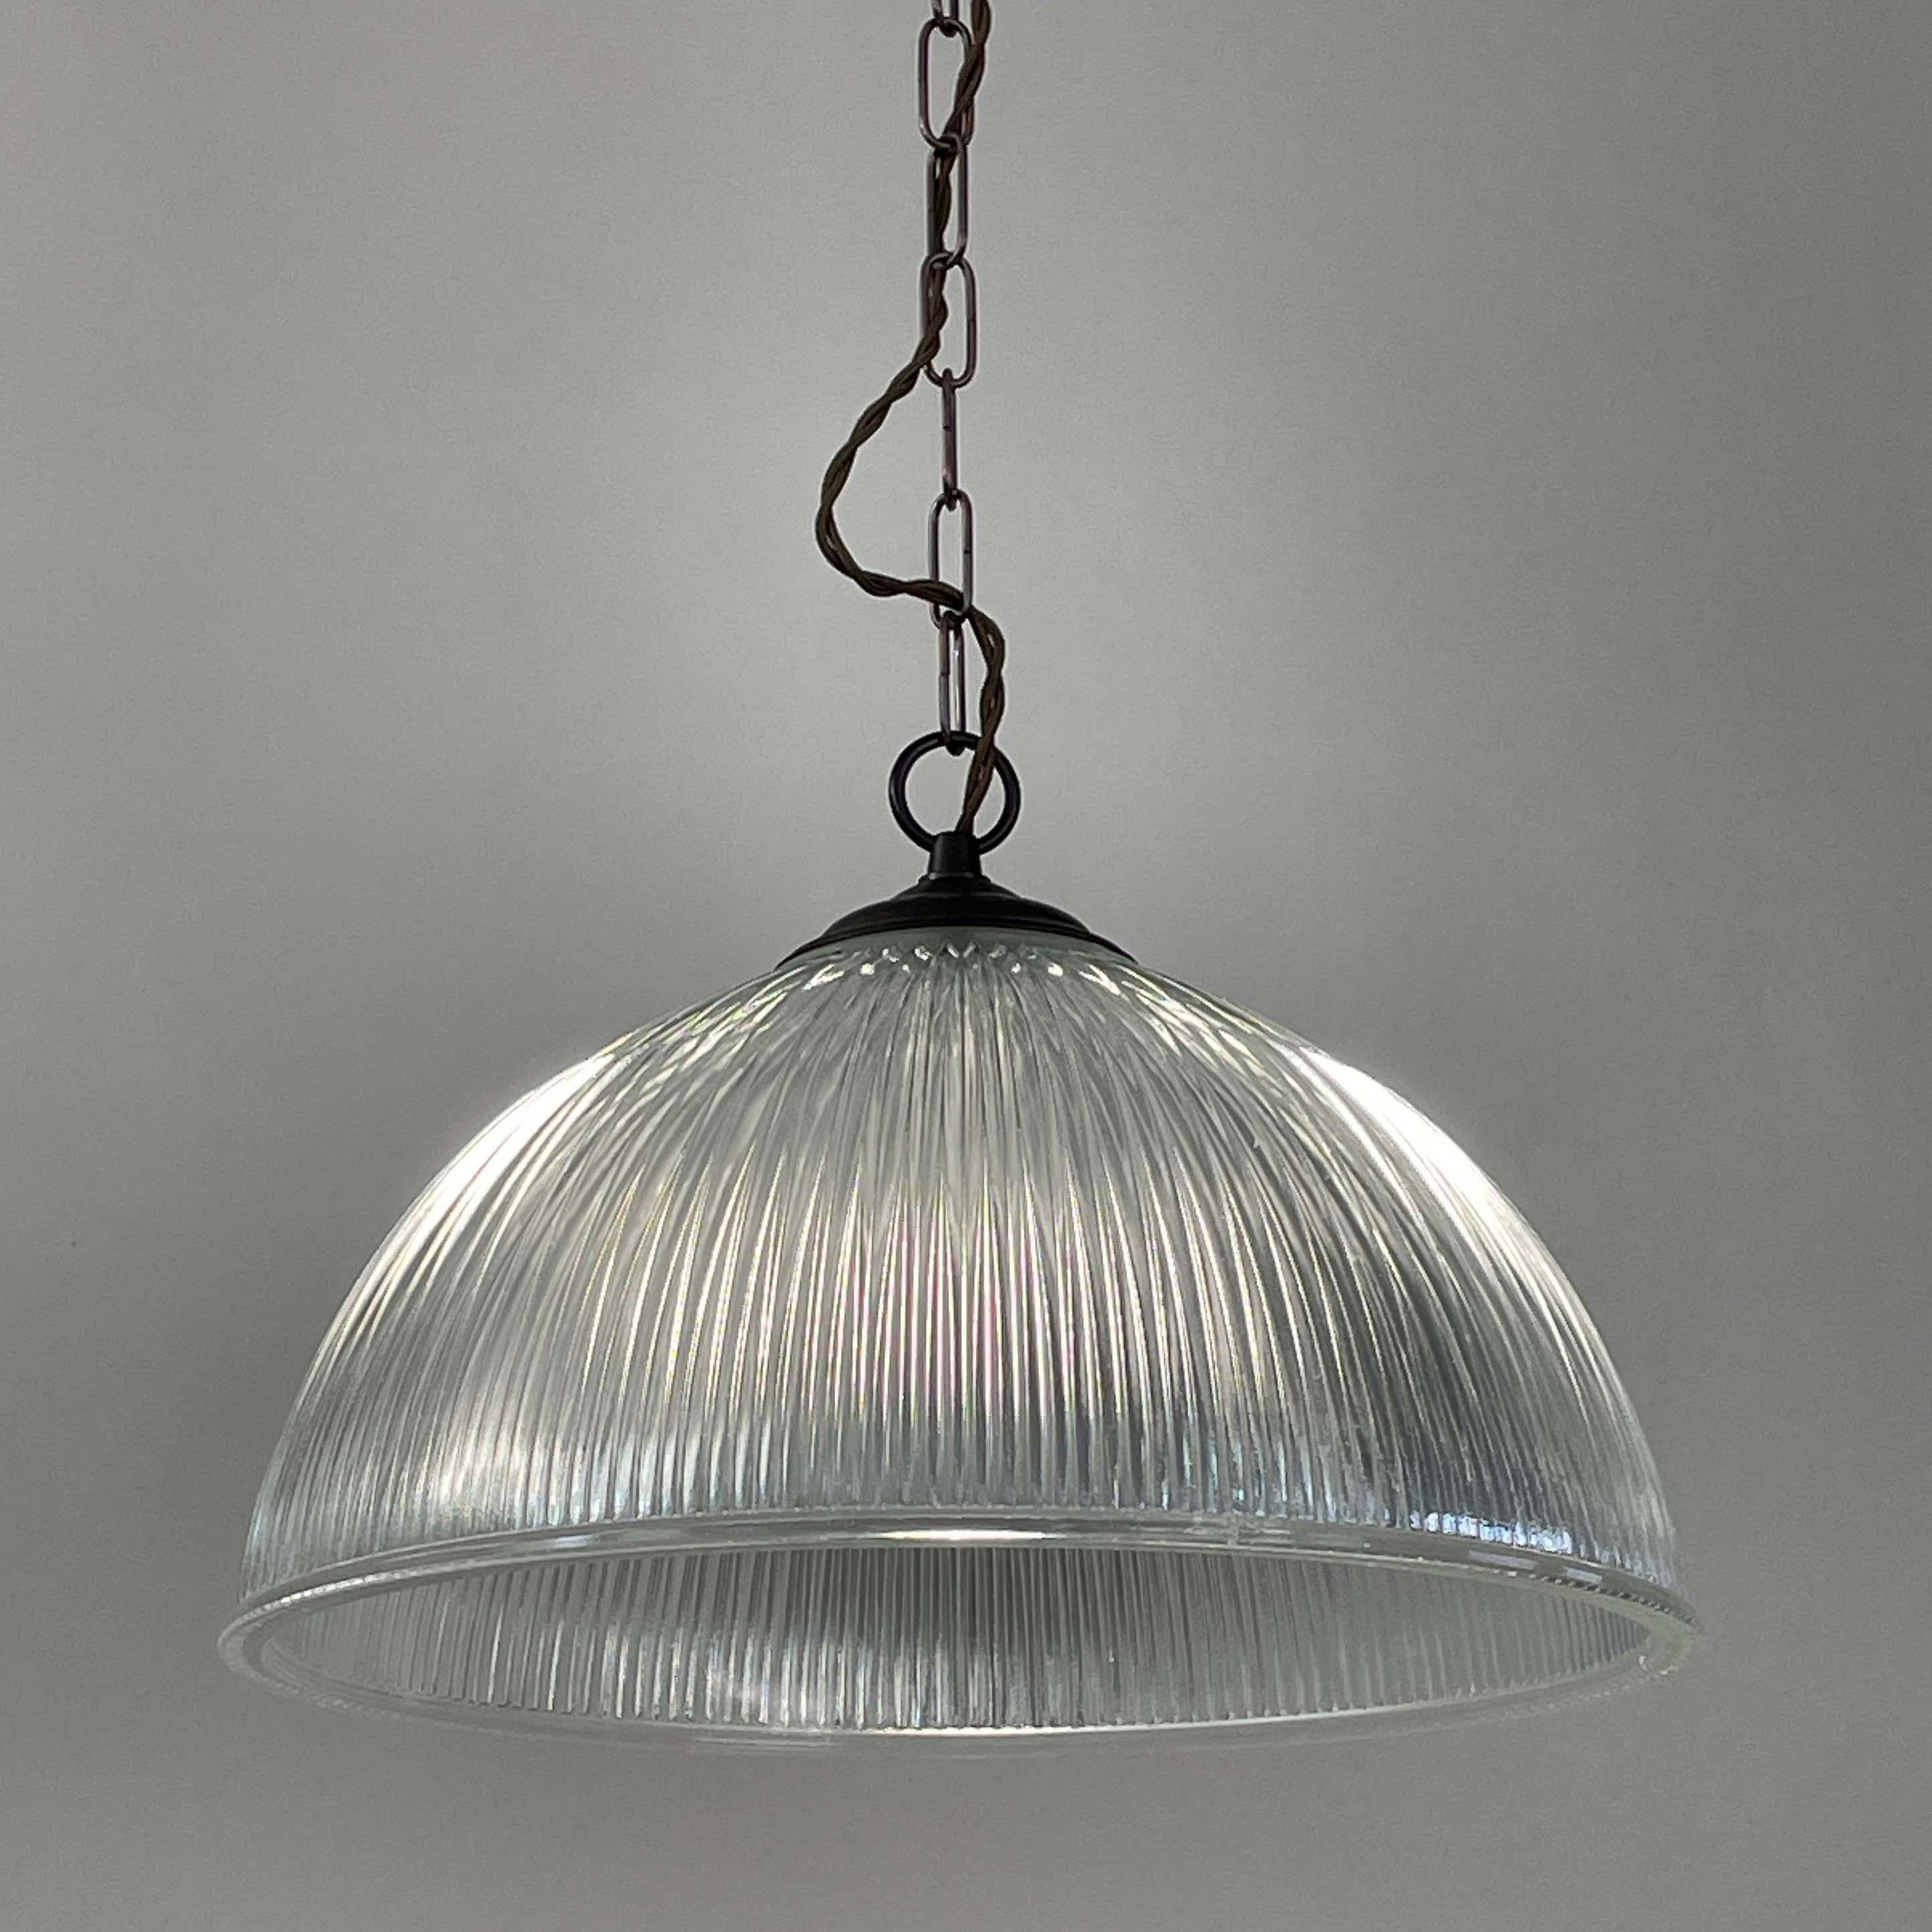 Art Deco Holophane Industrial Glass Pendant Lamp, France, 1930s For Sale 9